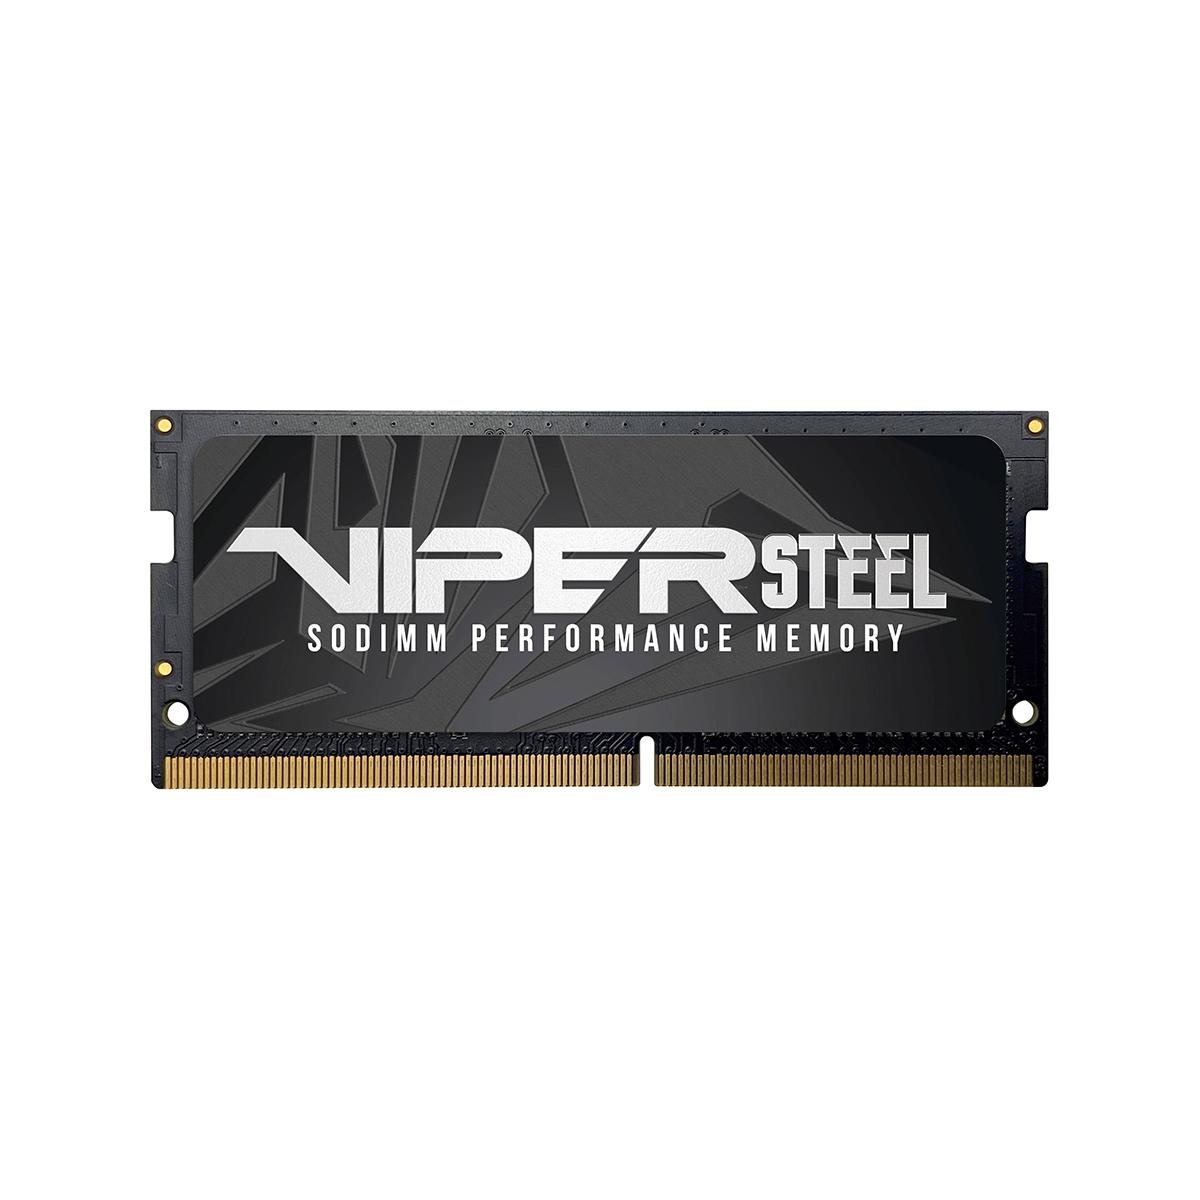 MEMORIA SODIMM DDR4 PATRIOT (PVS416G240C5S) VIPERSTEEL 16GB 2400MHZ, GRAY HEATSINK,CL15 - PATRIOT